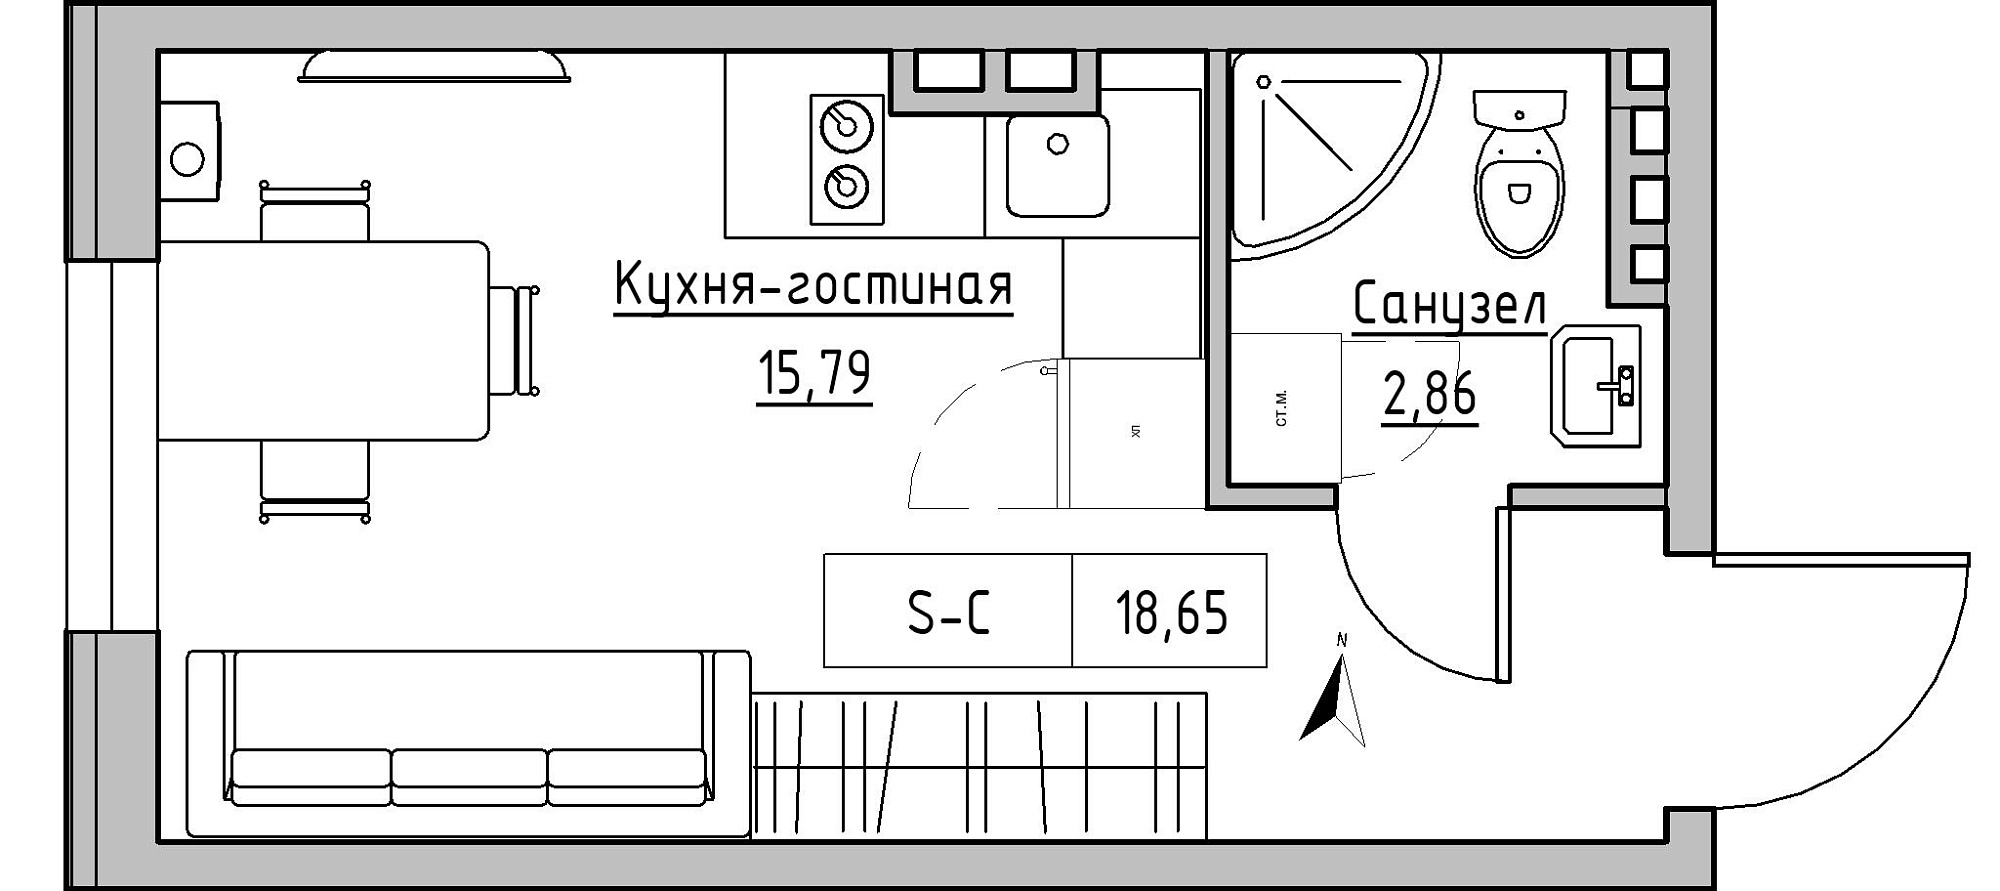 Planning Smart flats area 18.65m2, KS-024-02/0011.